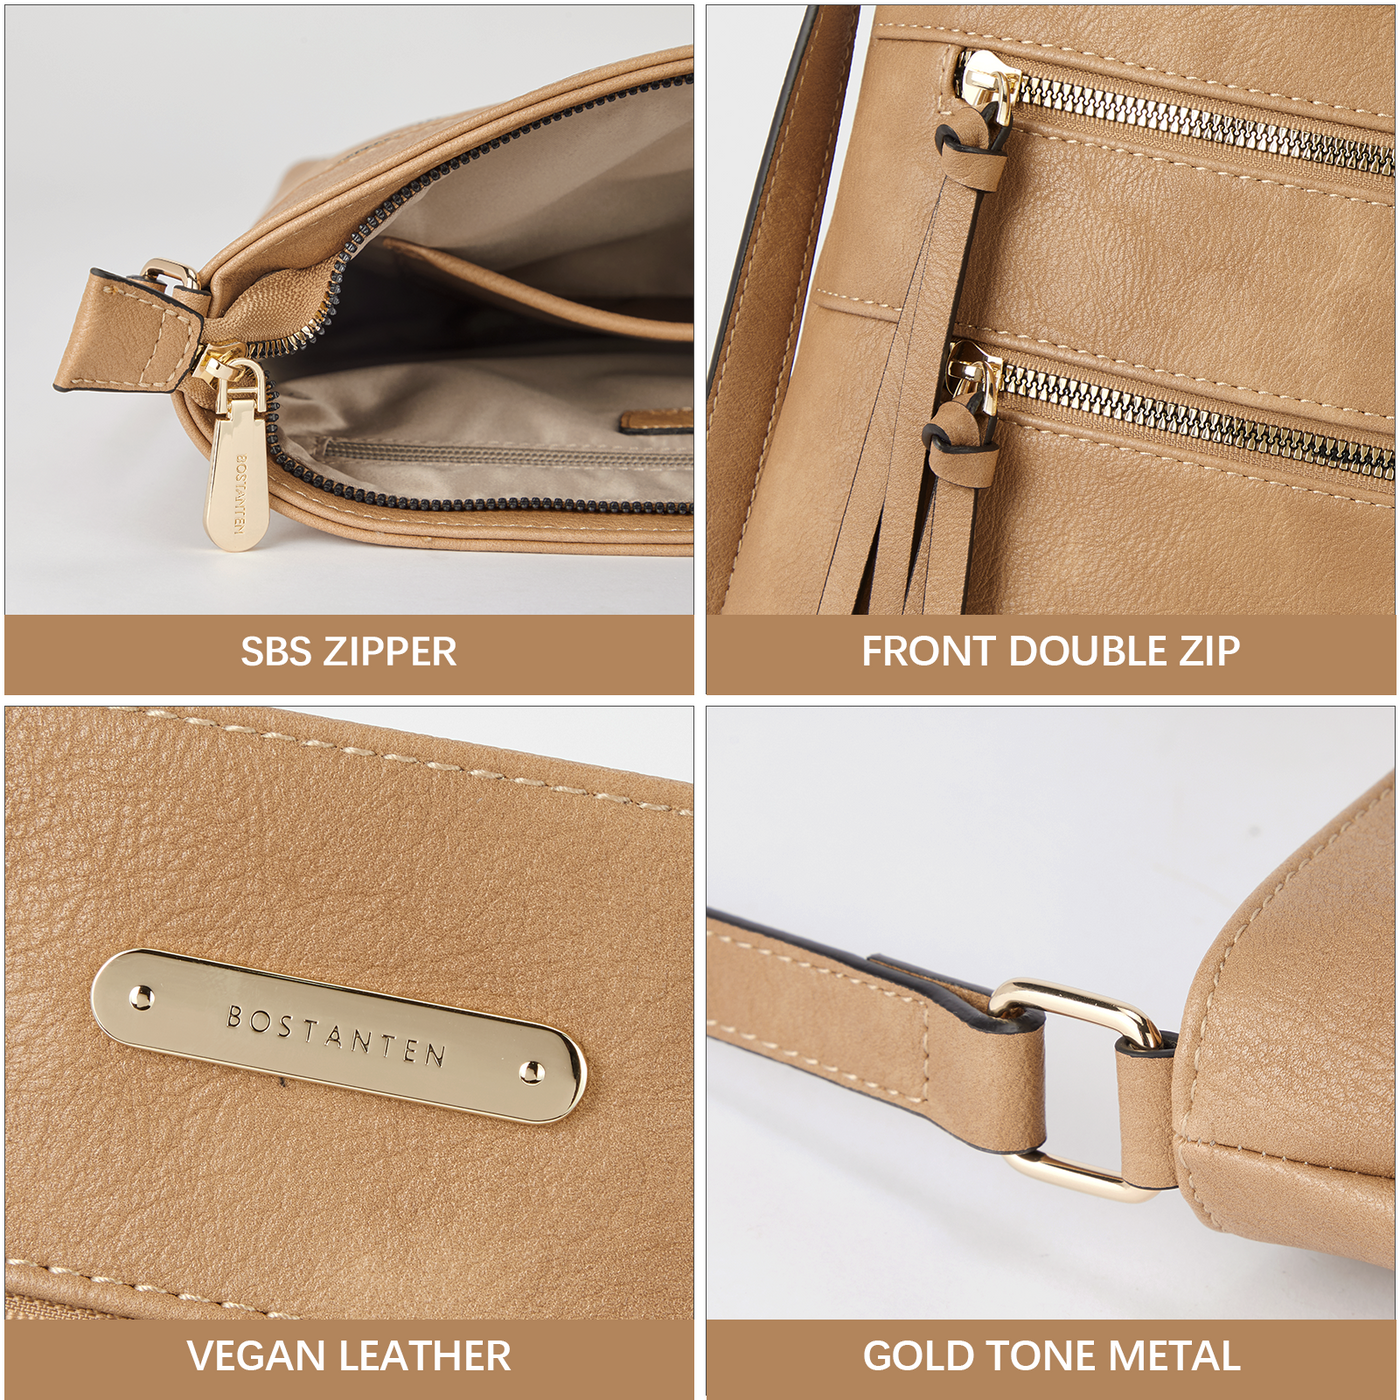 Lotty Chic and Versatile Vegan Leather Casual Satchel Bag - Crossbody Shoulder Bag Purse